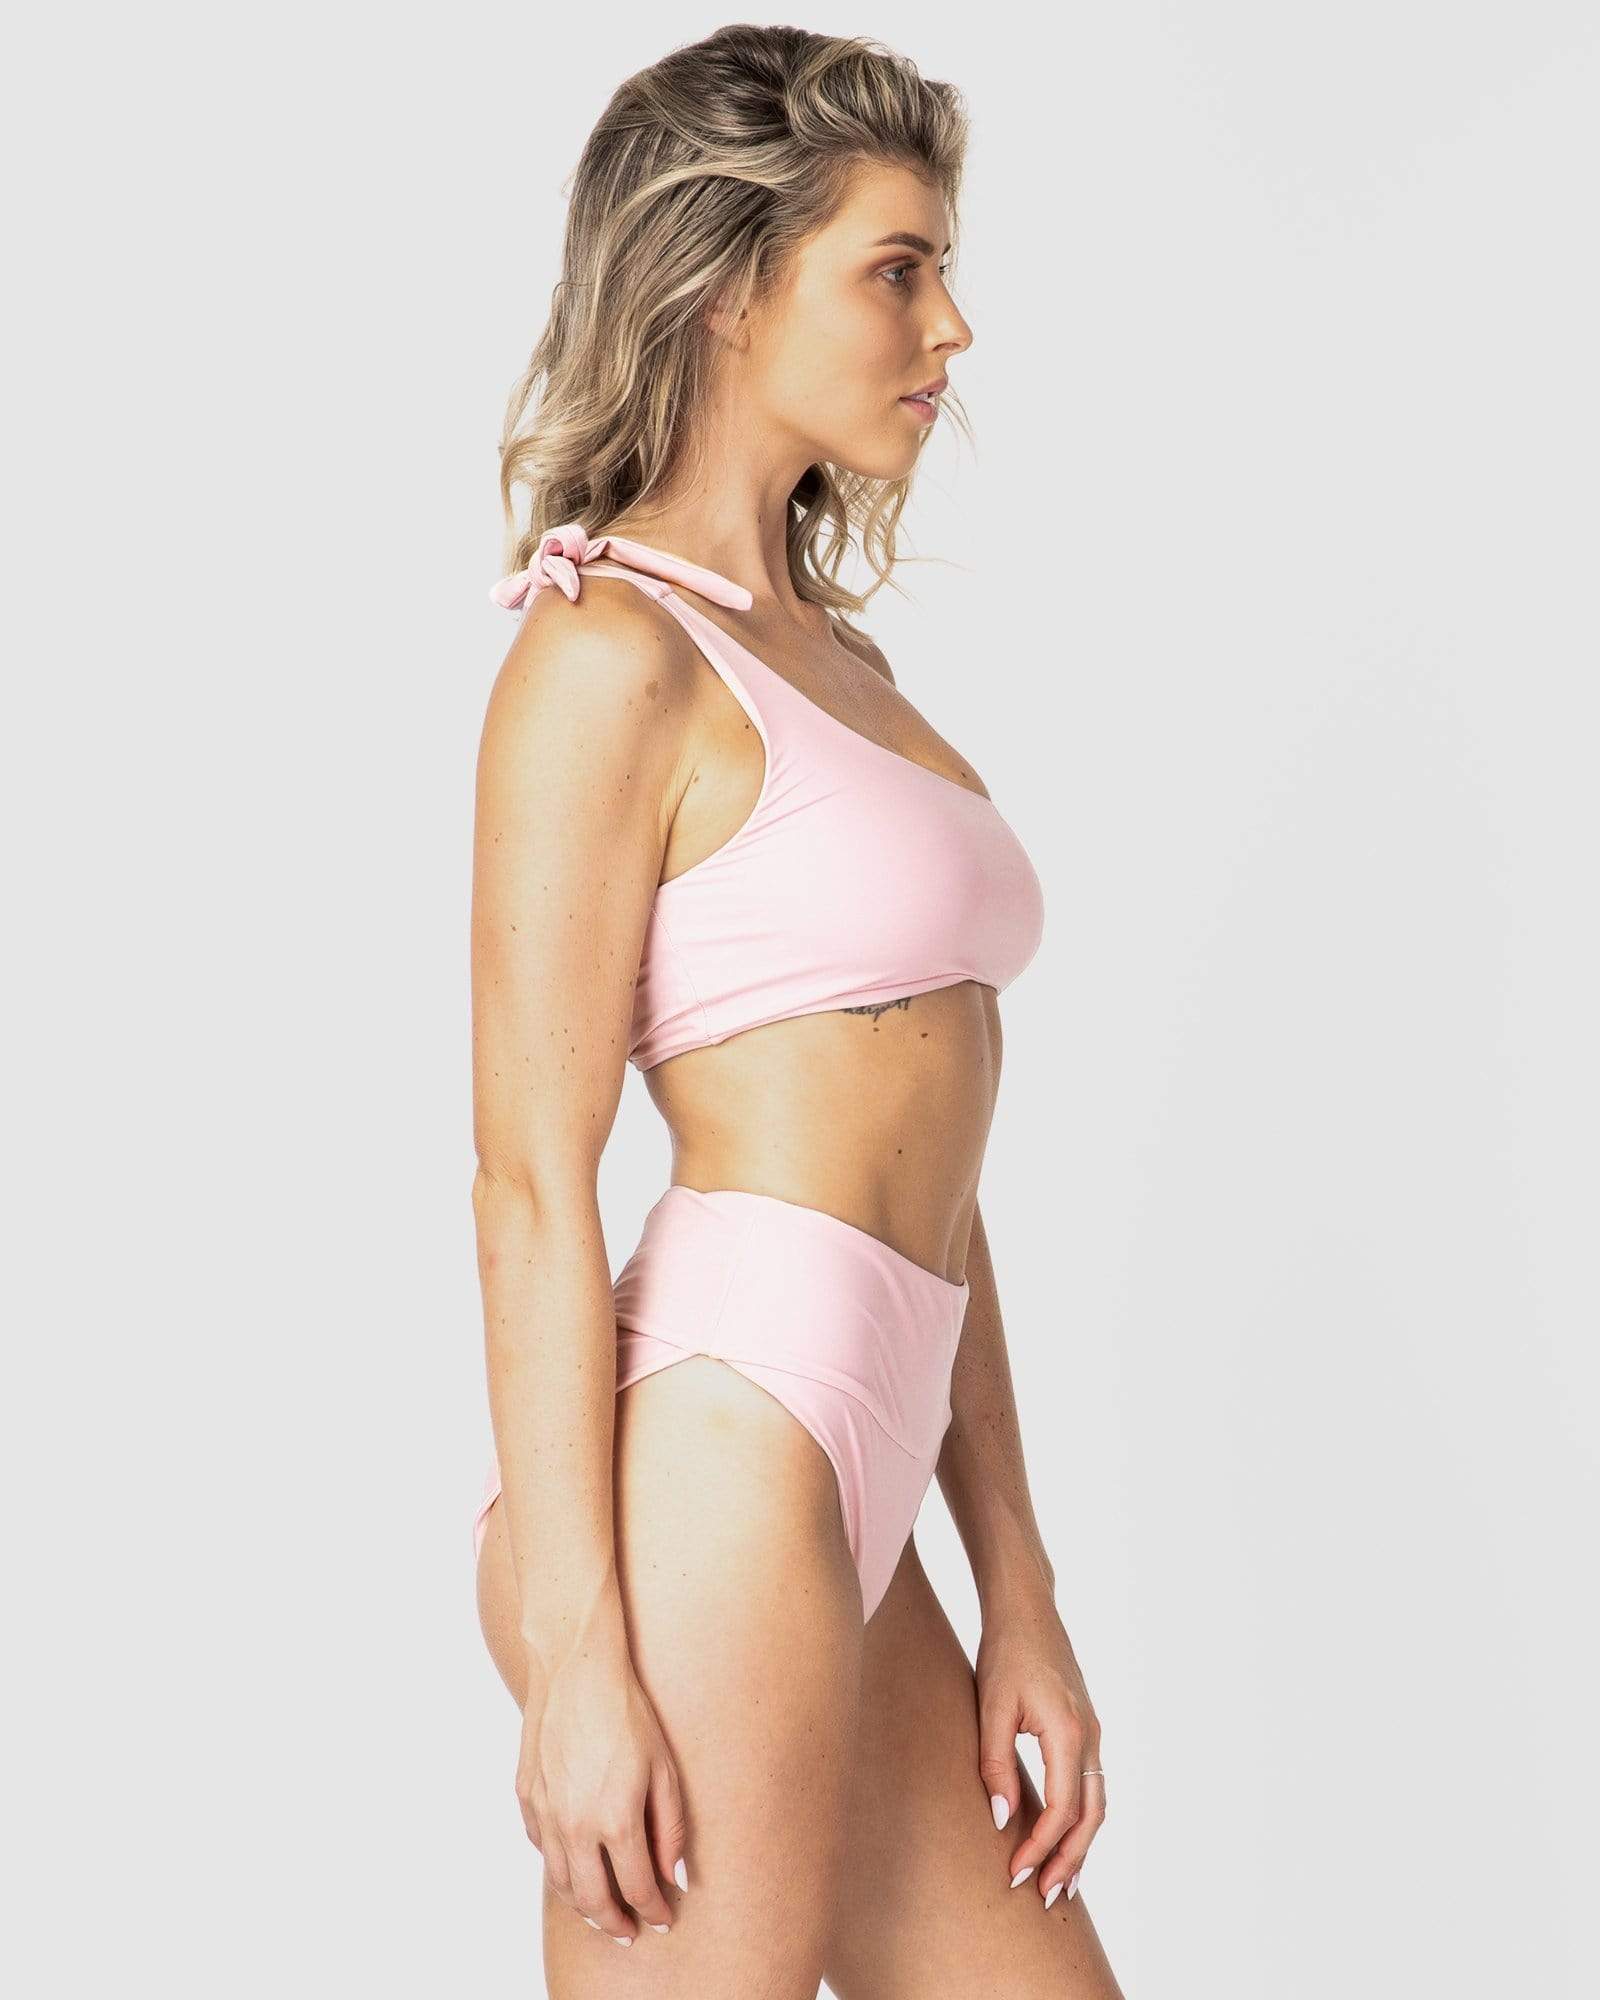 <b>Tulum</b><br>Lychee Shouldered Top<br>Sustainable Australian Swimwear-Cali Rae-stride